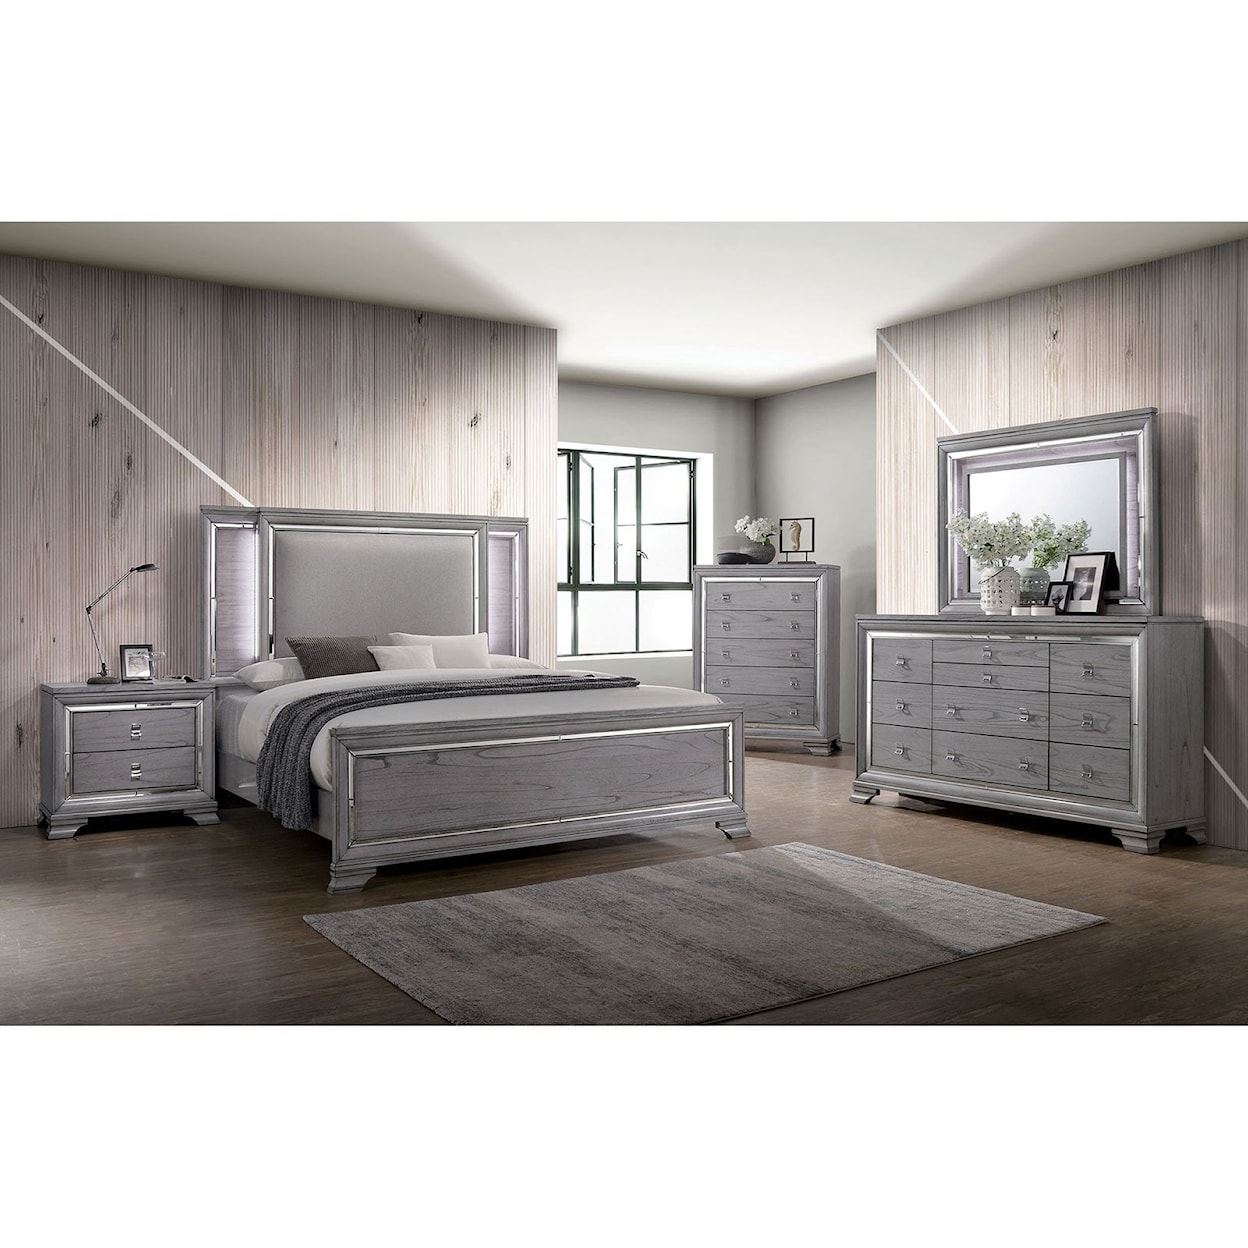 Furniture of America Alanis California King Bedroom Set